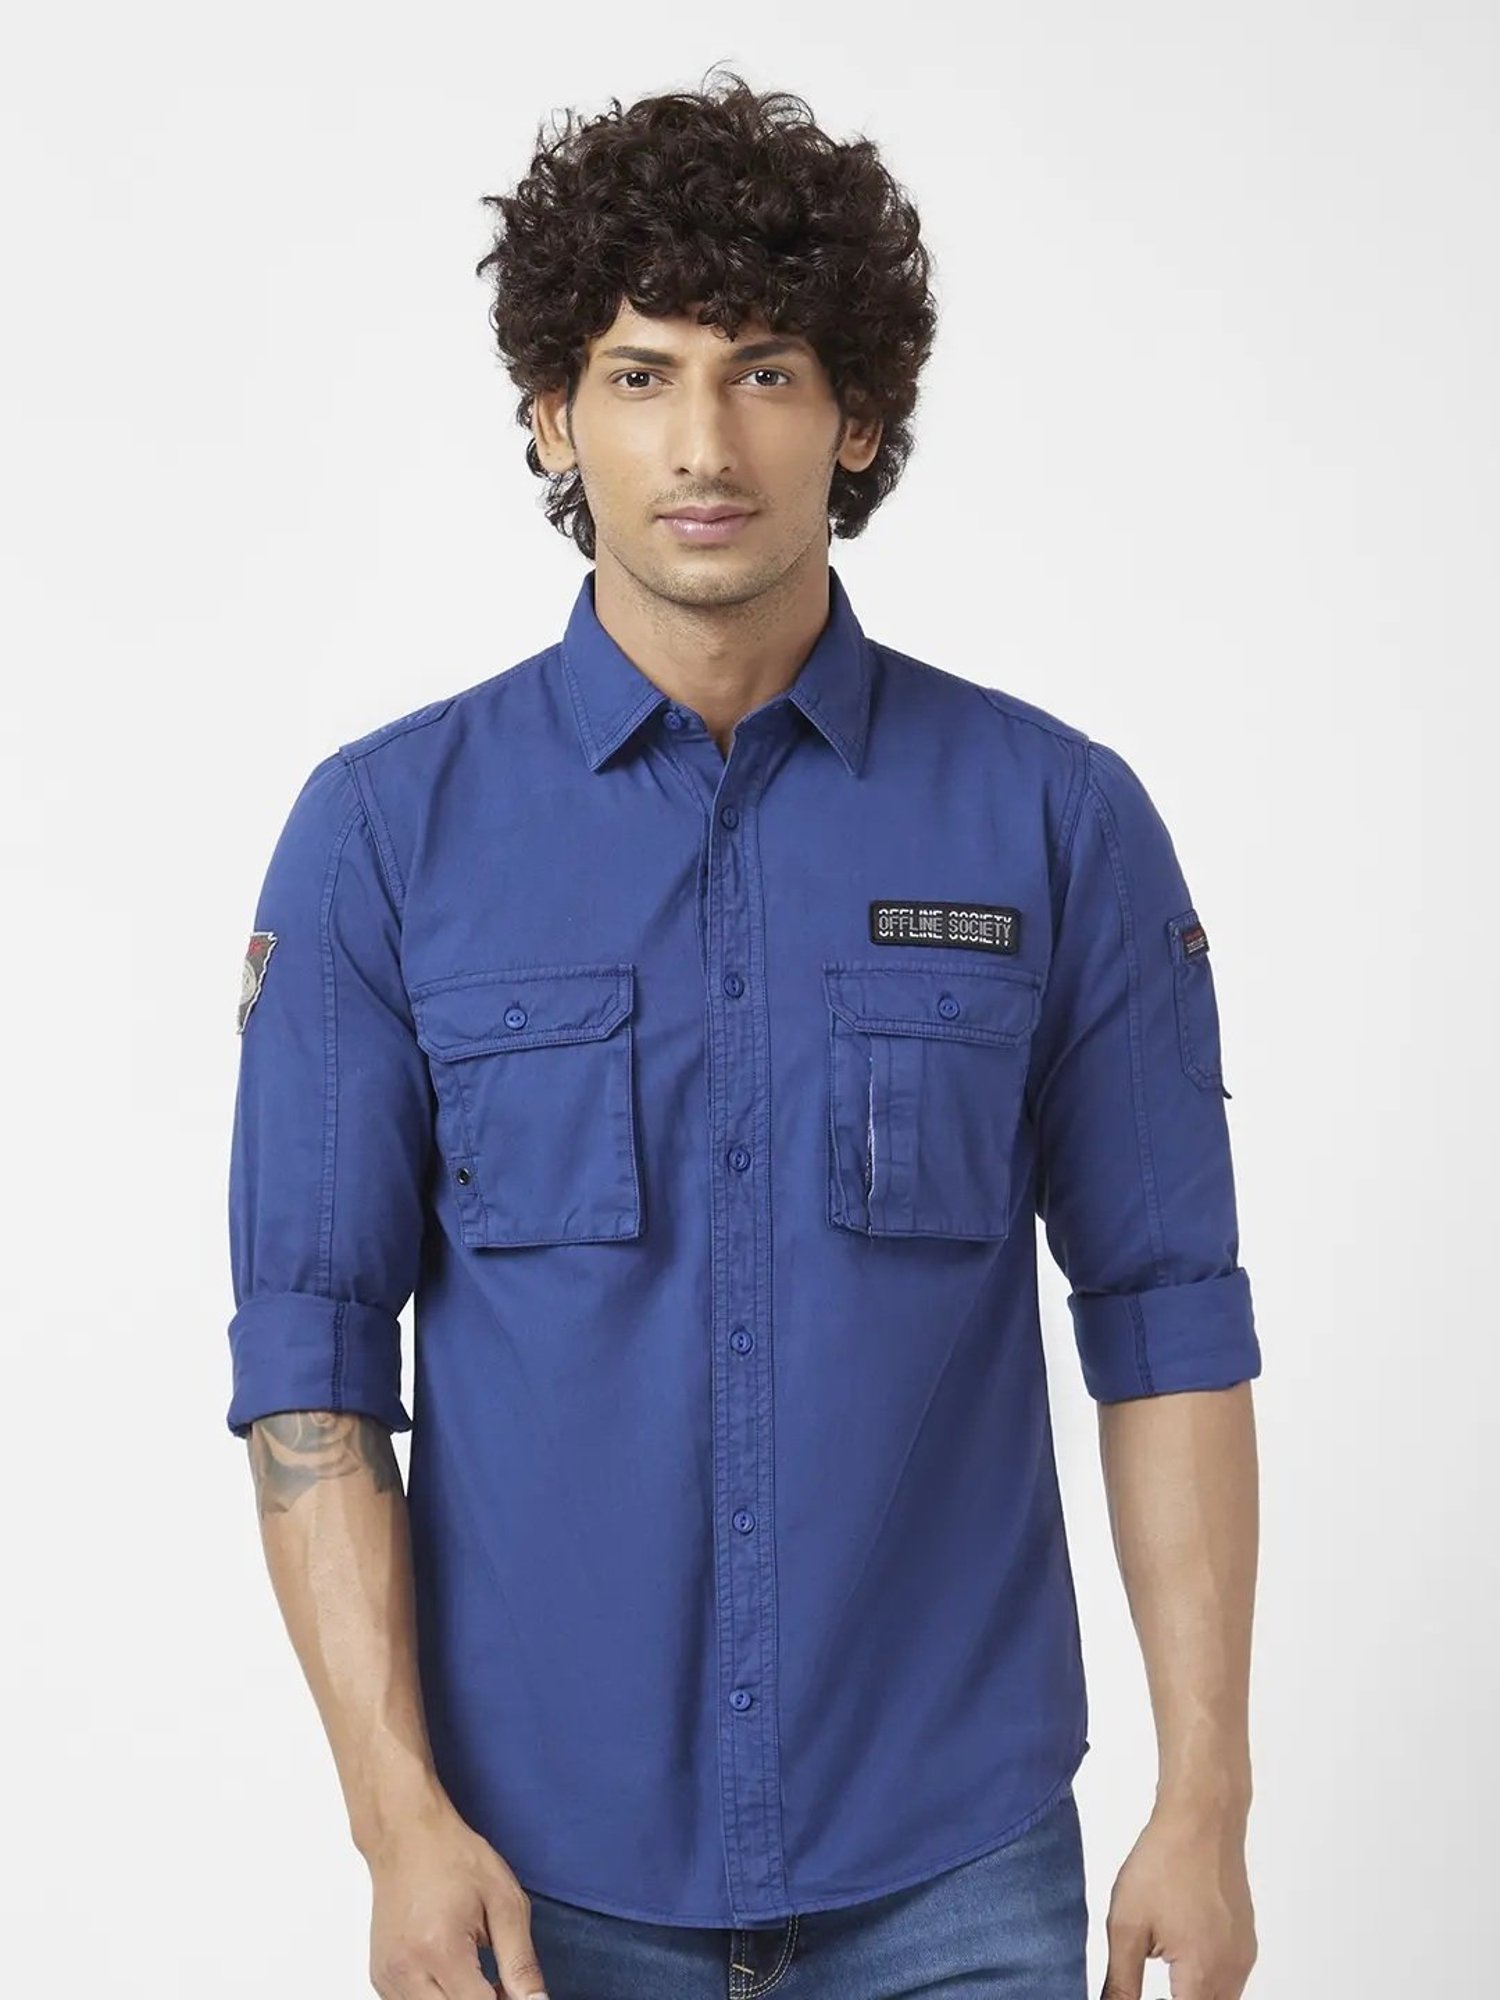 Mufti Button Up Shirt Mens 2XL Blue Plaid Long Sleeve Casual | eBay